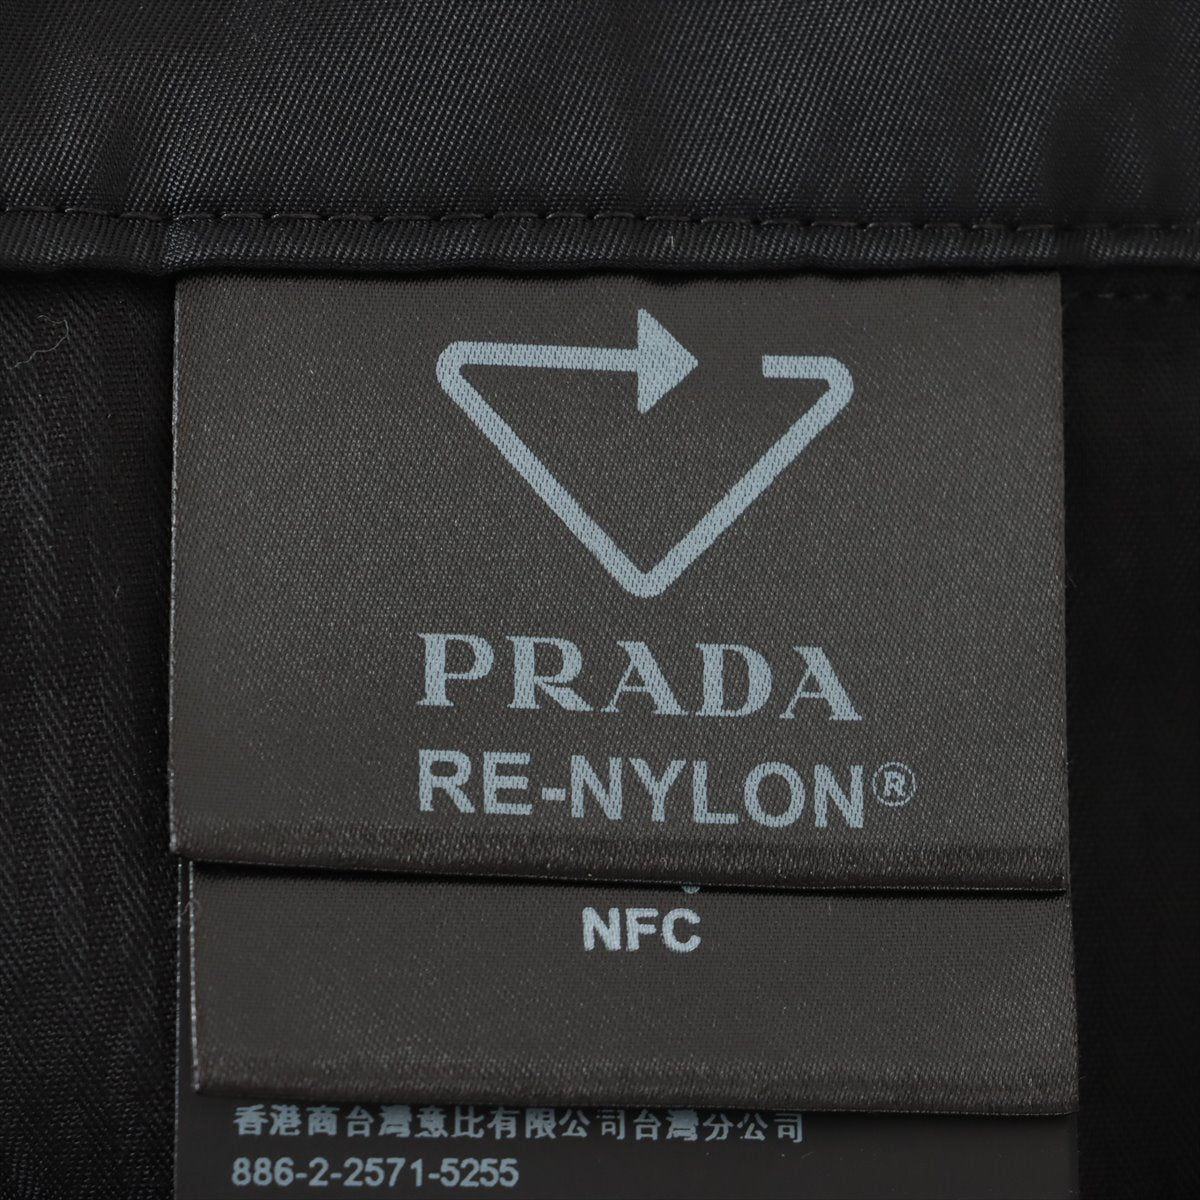 Prada Re Nylon Re Nylon 23 years Nylon Pants 44 Men's Black  DNA911  Bermuda shorts Triangle logo